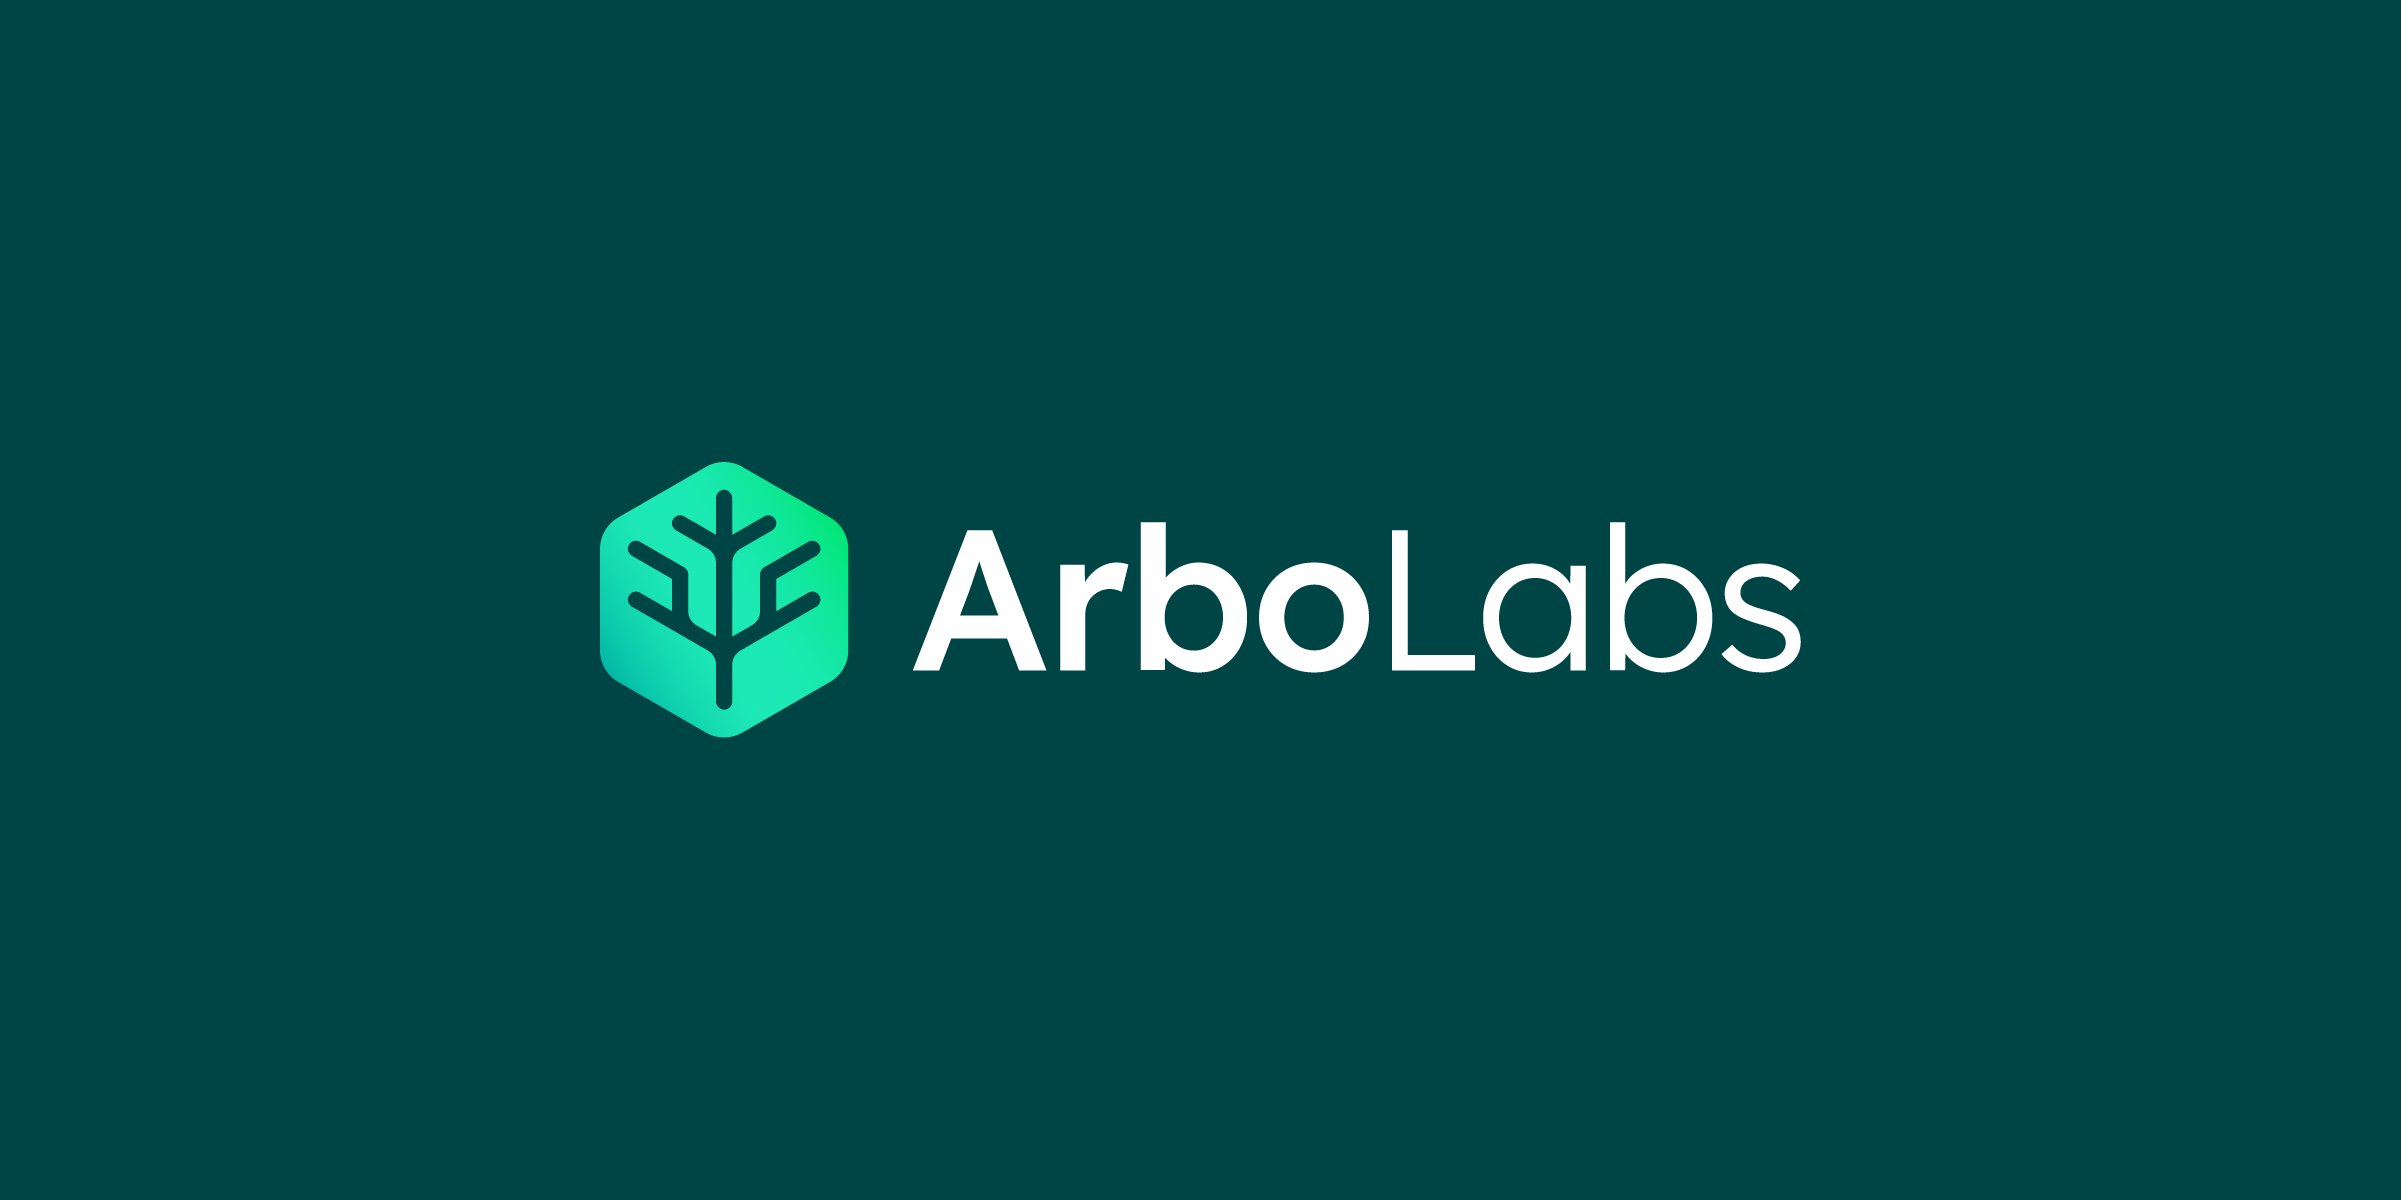 arbolabs_by_brandformafull_logo_dark_background_color